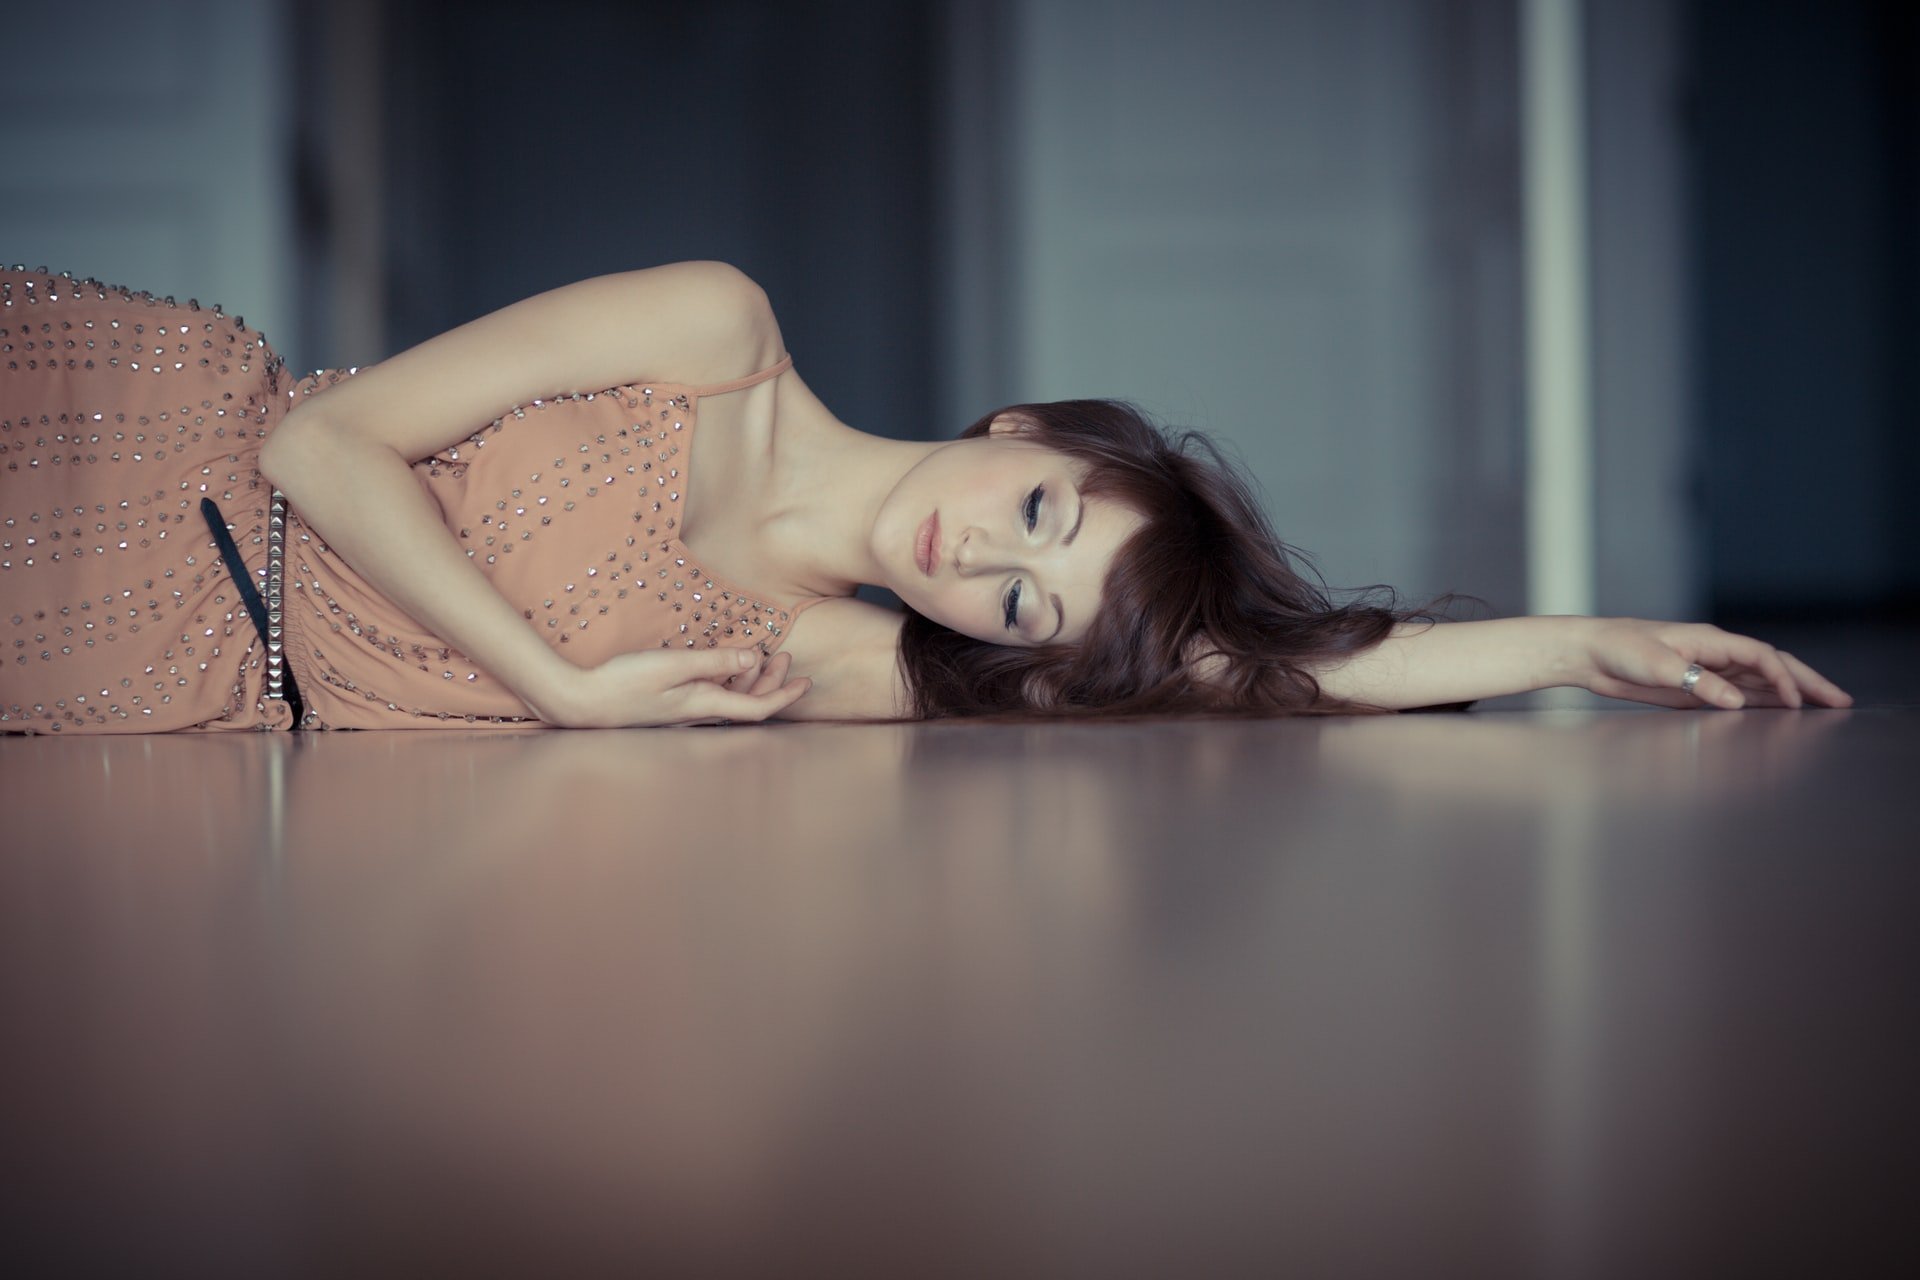 The girl slept on the floor that night. | Source: Unsplash